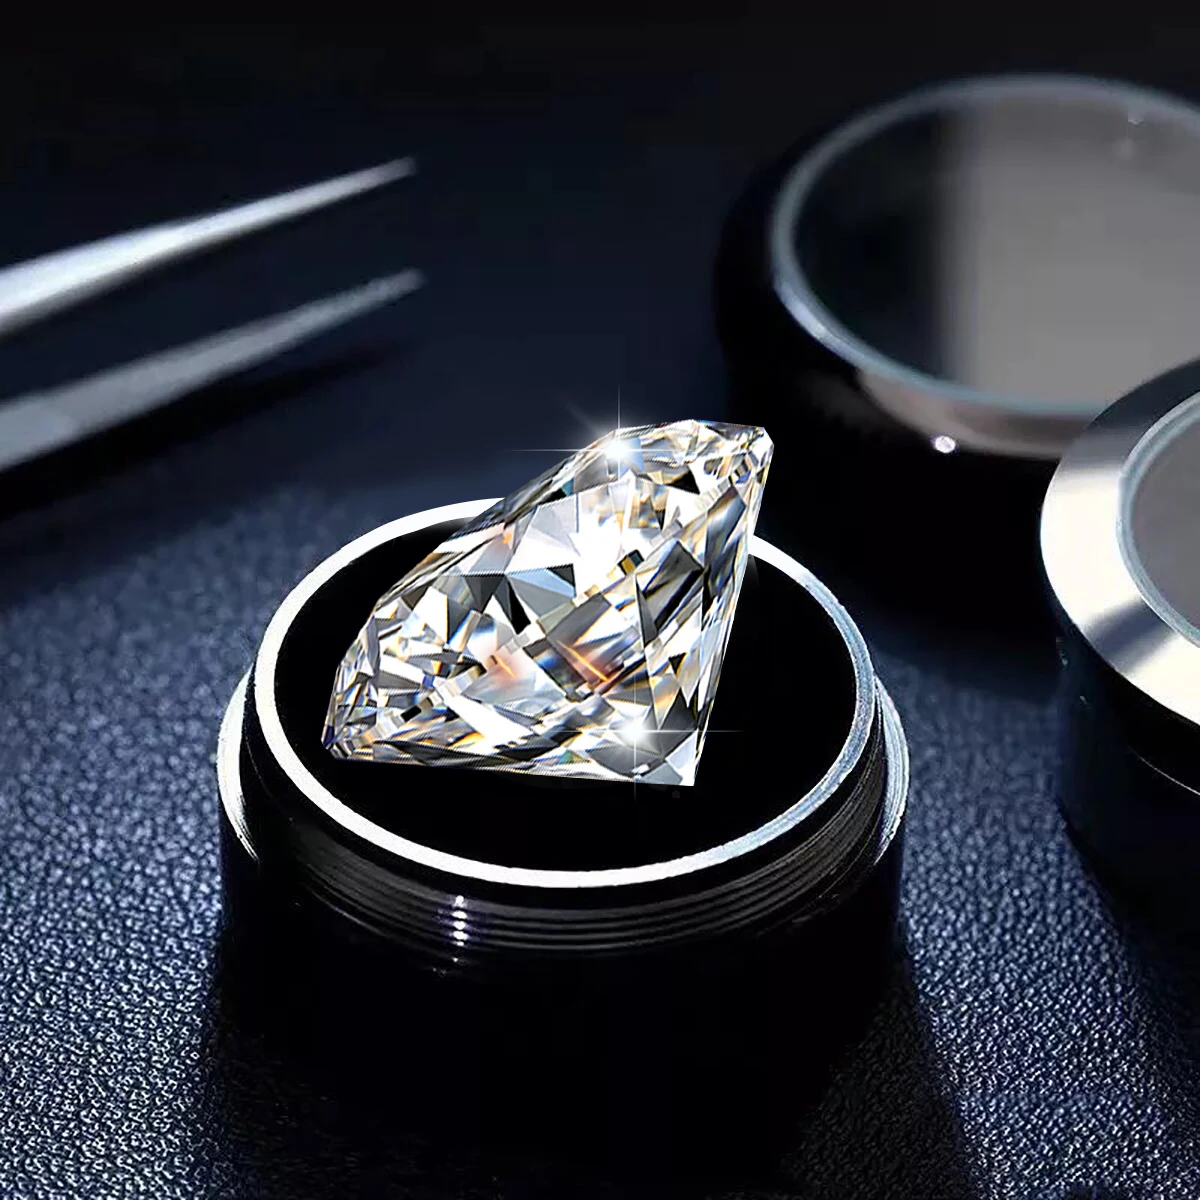 Free Shipping Items 0.1 To 10ct D Color VVS1 Moissanite Diamonds Certified Pass Diamond Test Moissanita Stones Promo Loose Gems